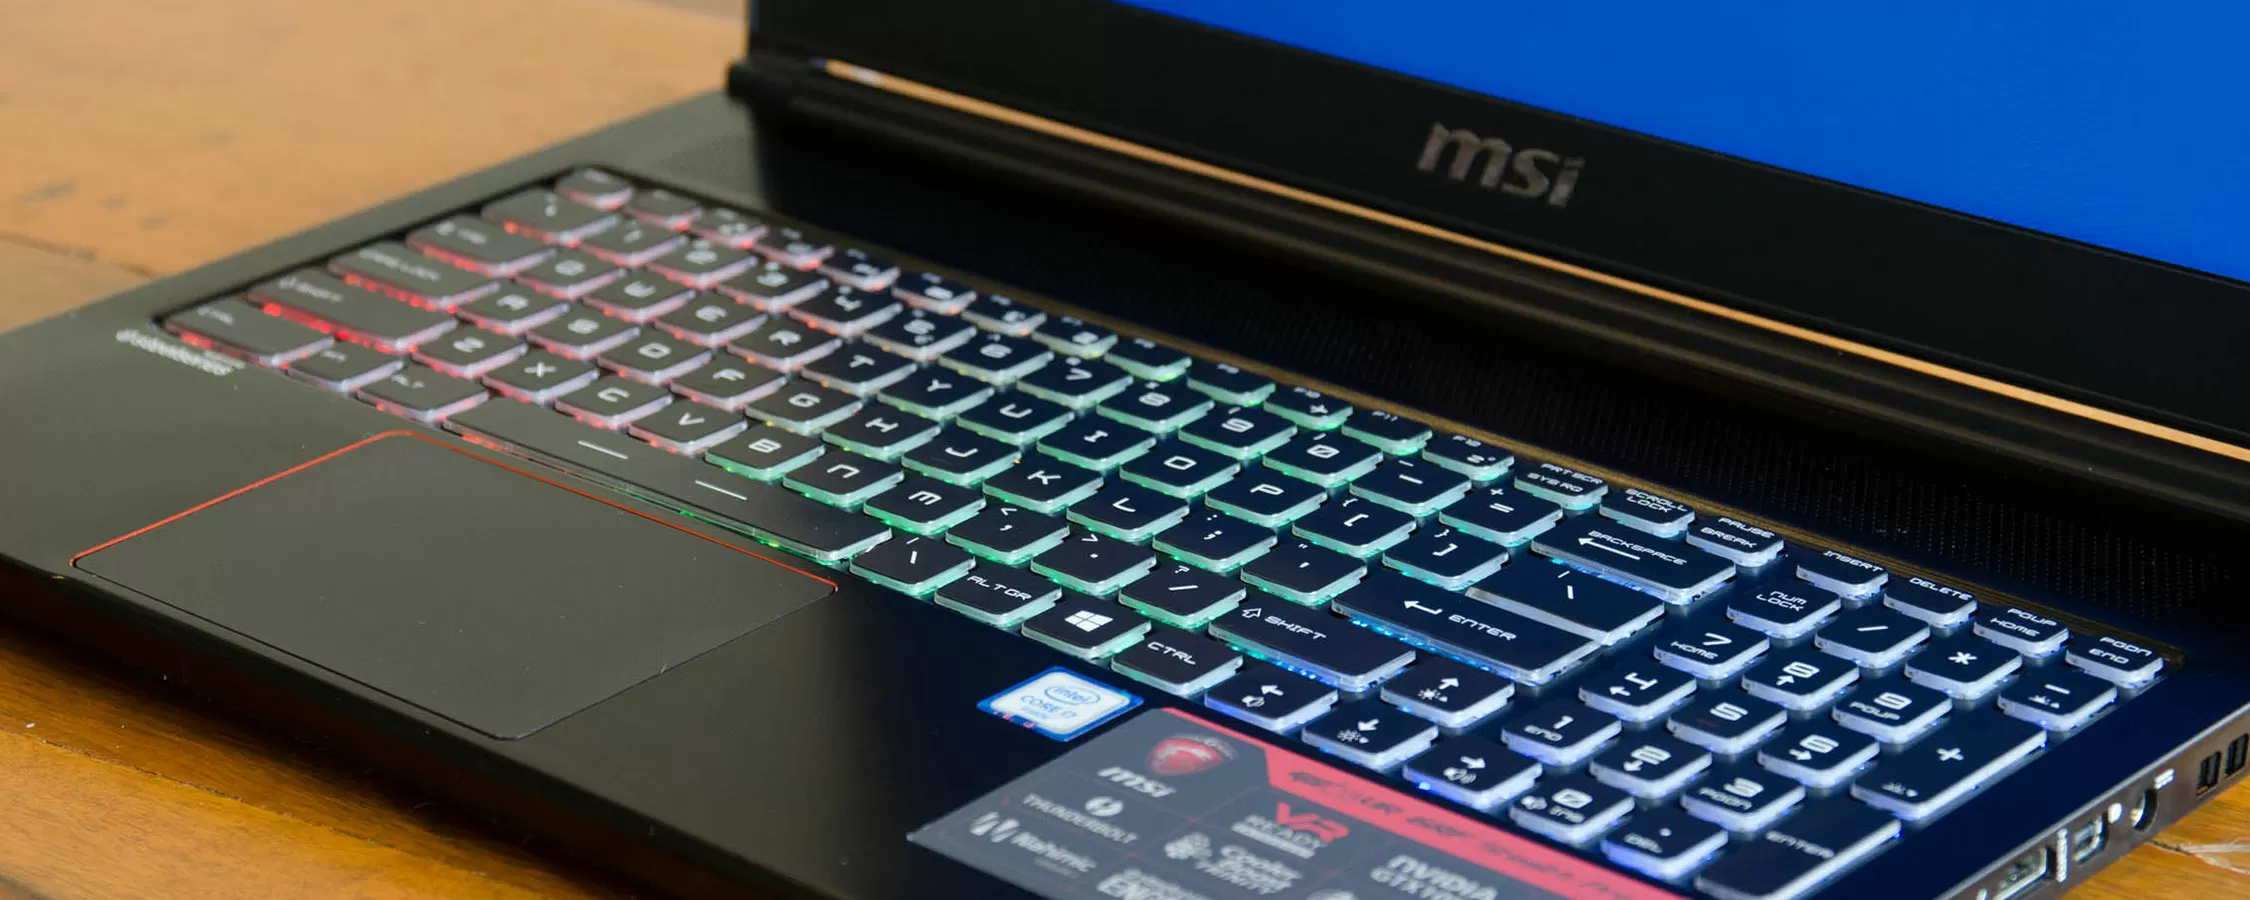 Keyboard and Trackpad: gaming laptop